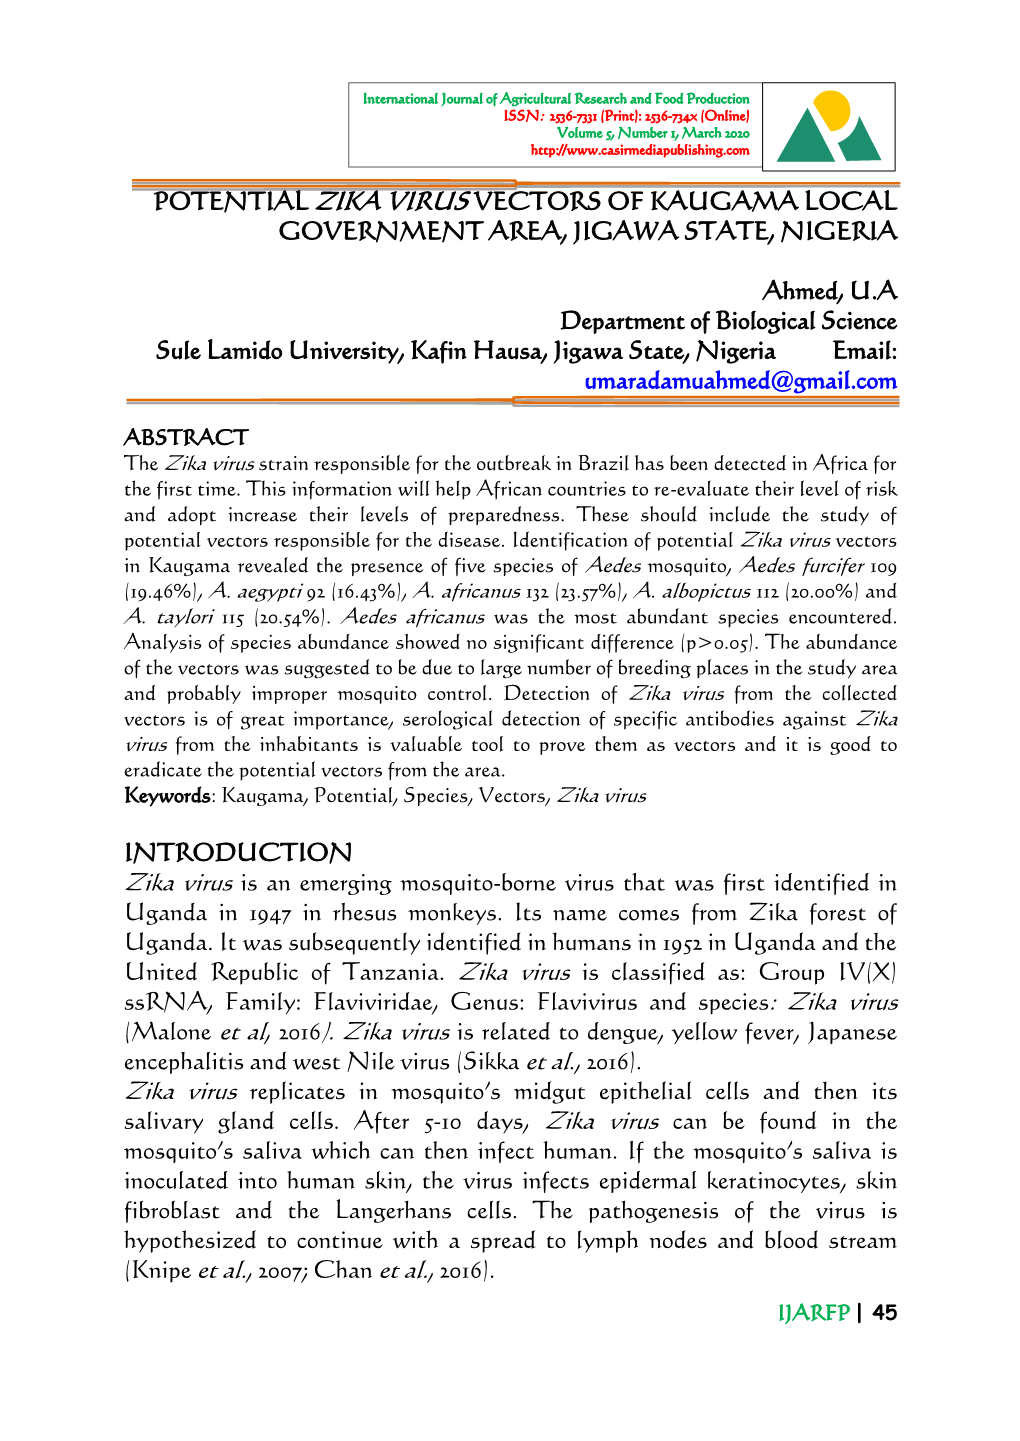 Zika Virus Vectors of Kaugama Local Government Area, Jigawa State, Nigeria